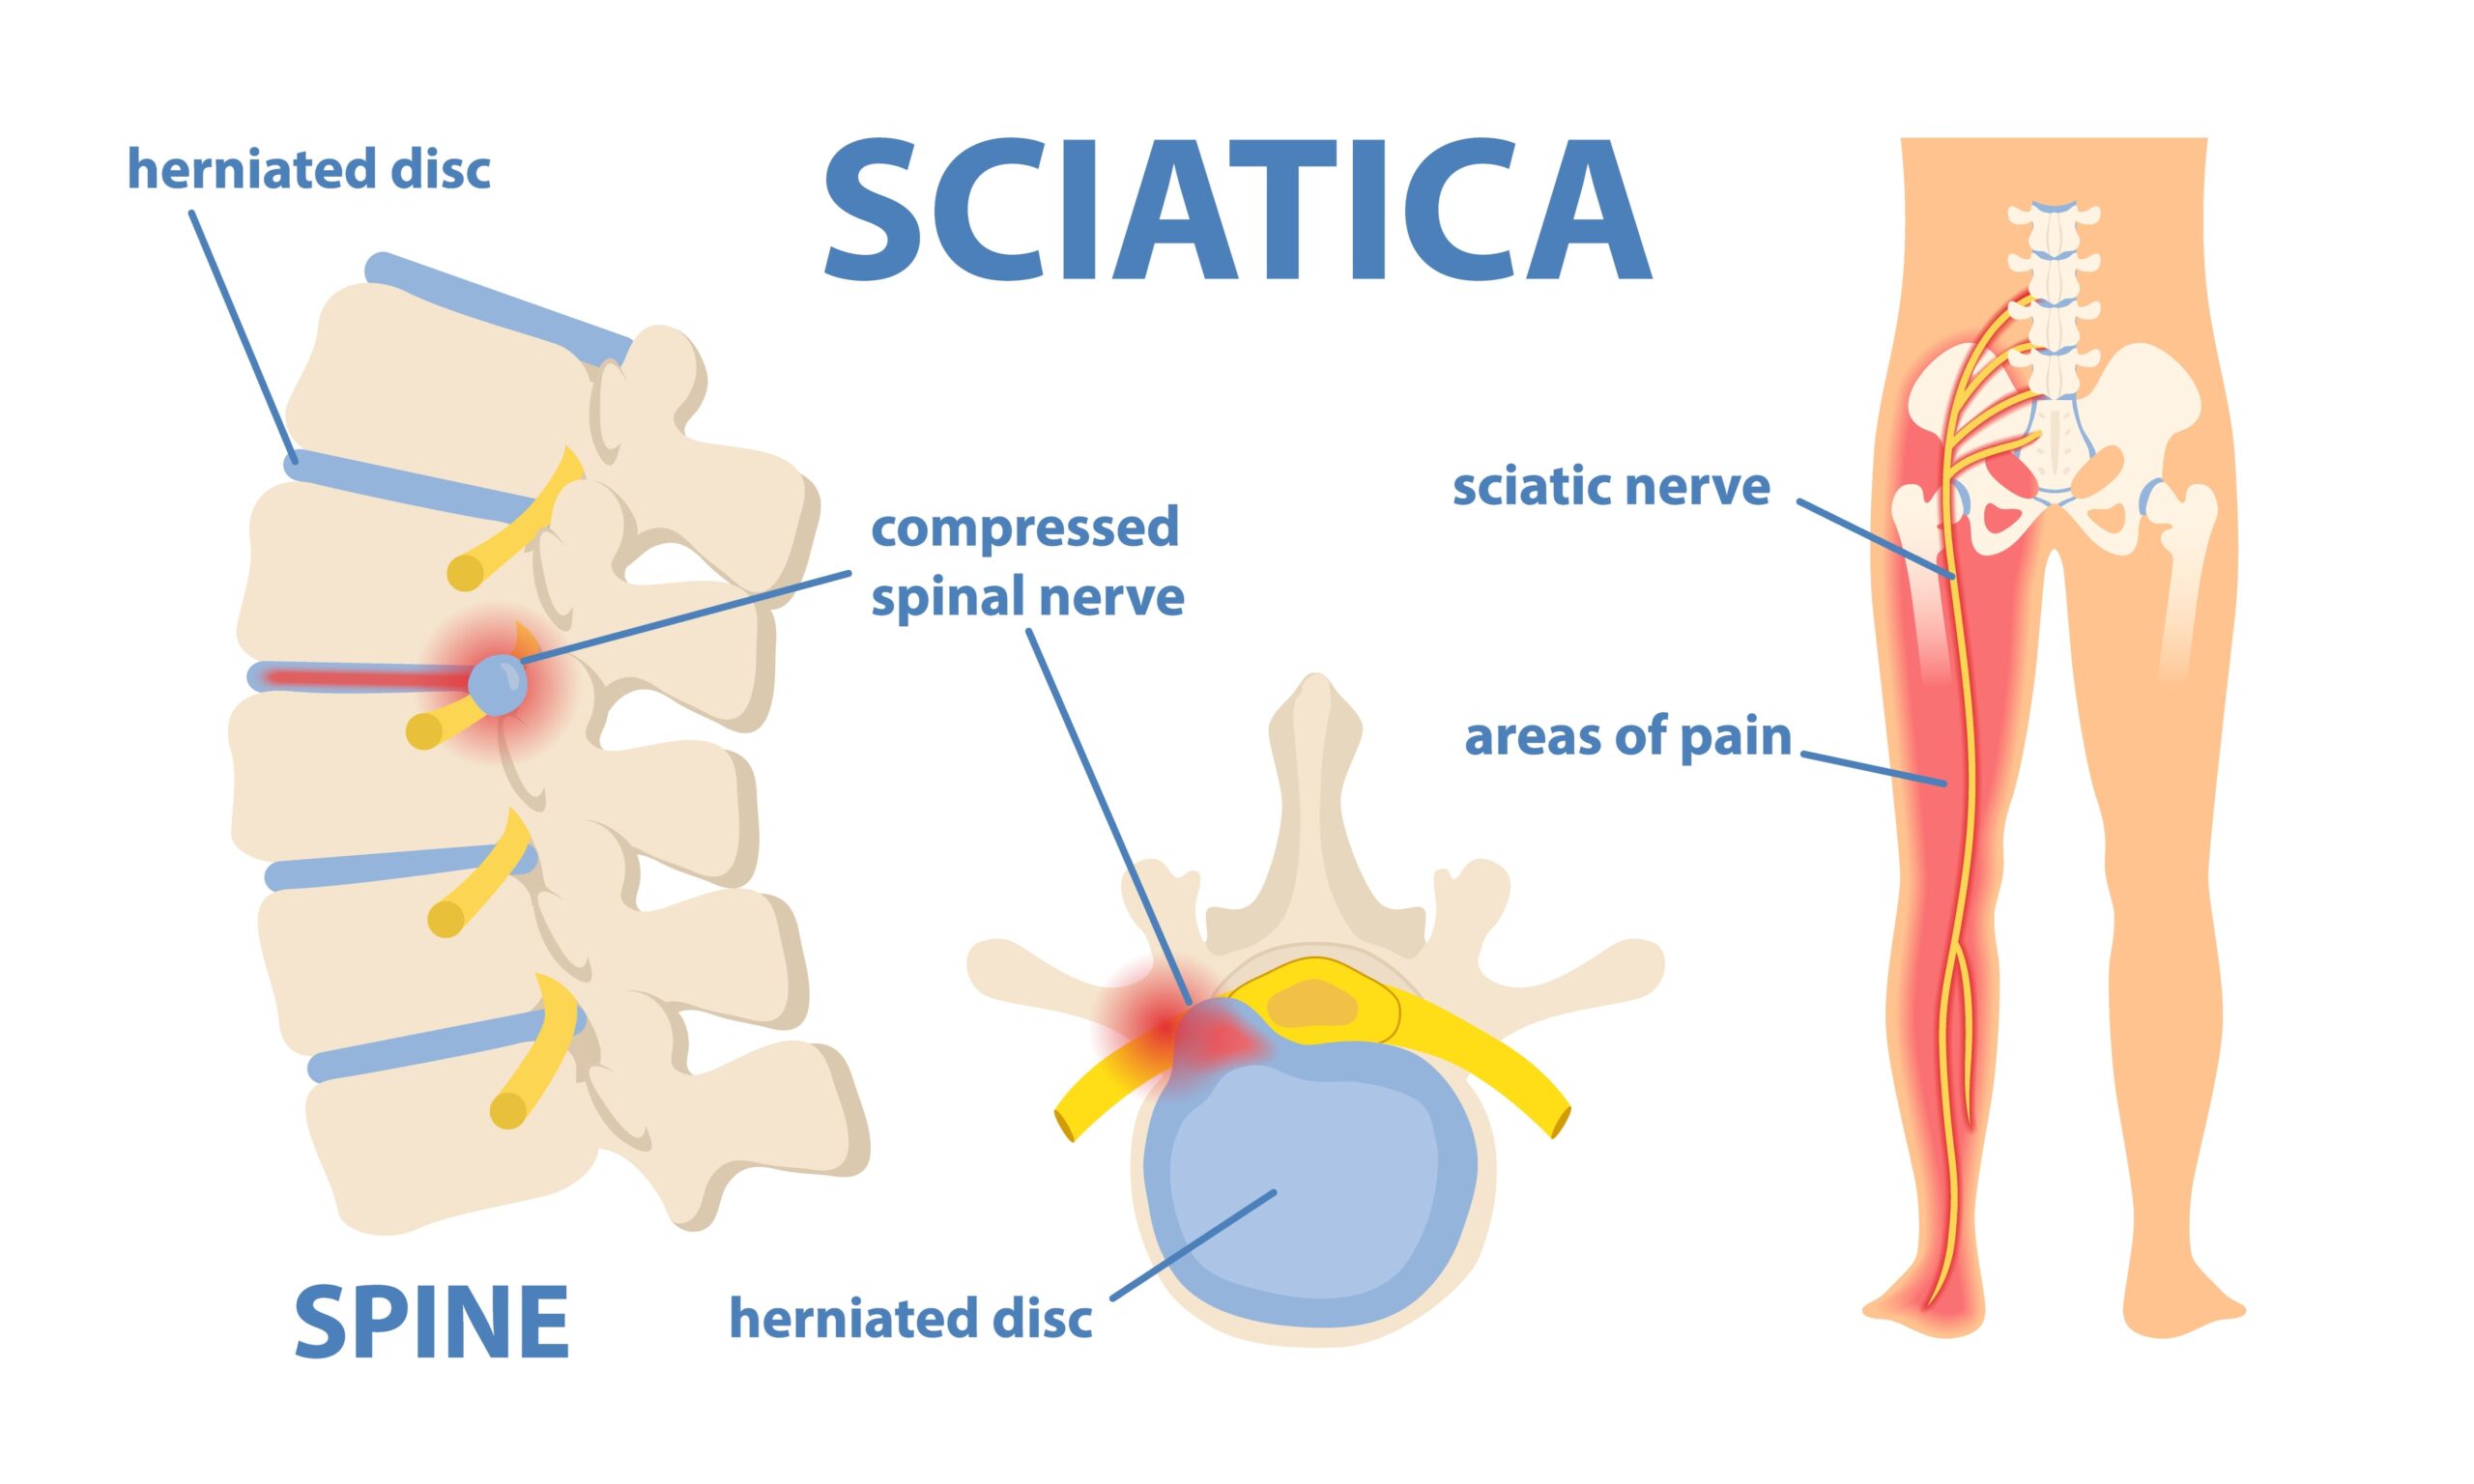 sciatica temporary or permanent